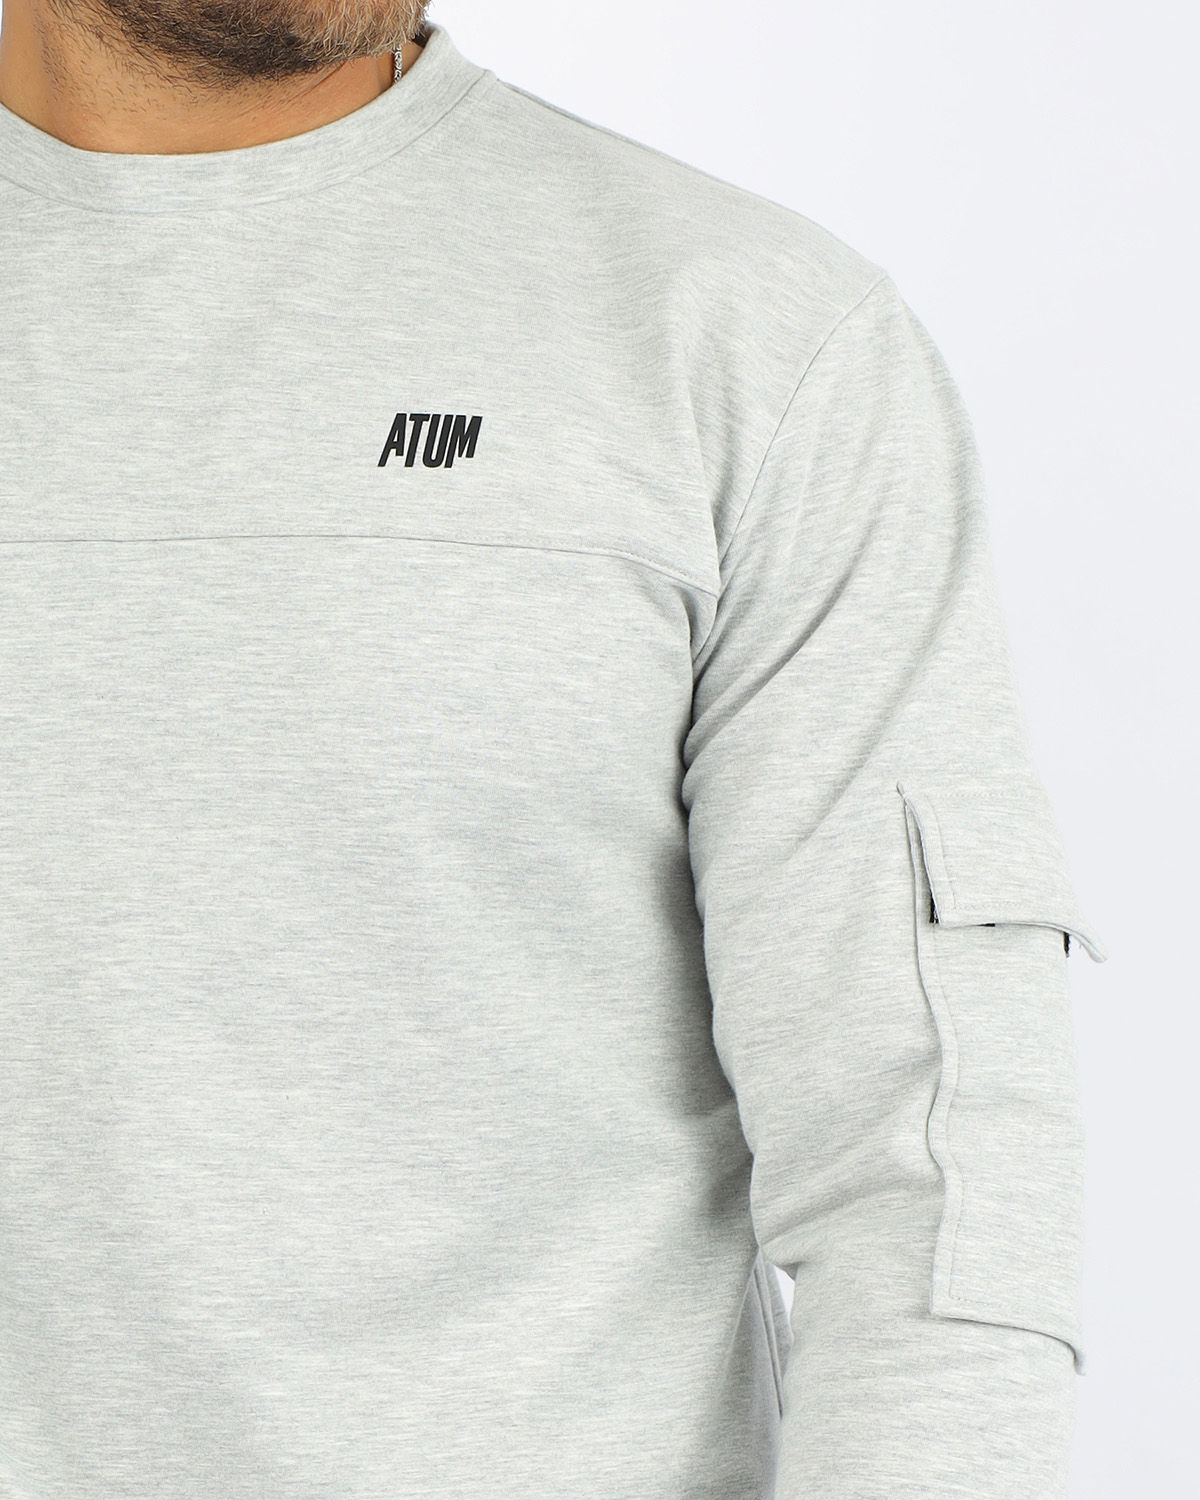 Atum Men's Long-Sleeve T-Shirt - Atum Egypt #